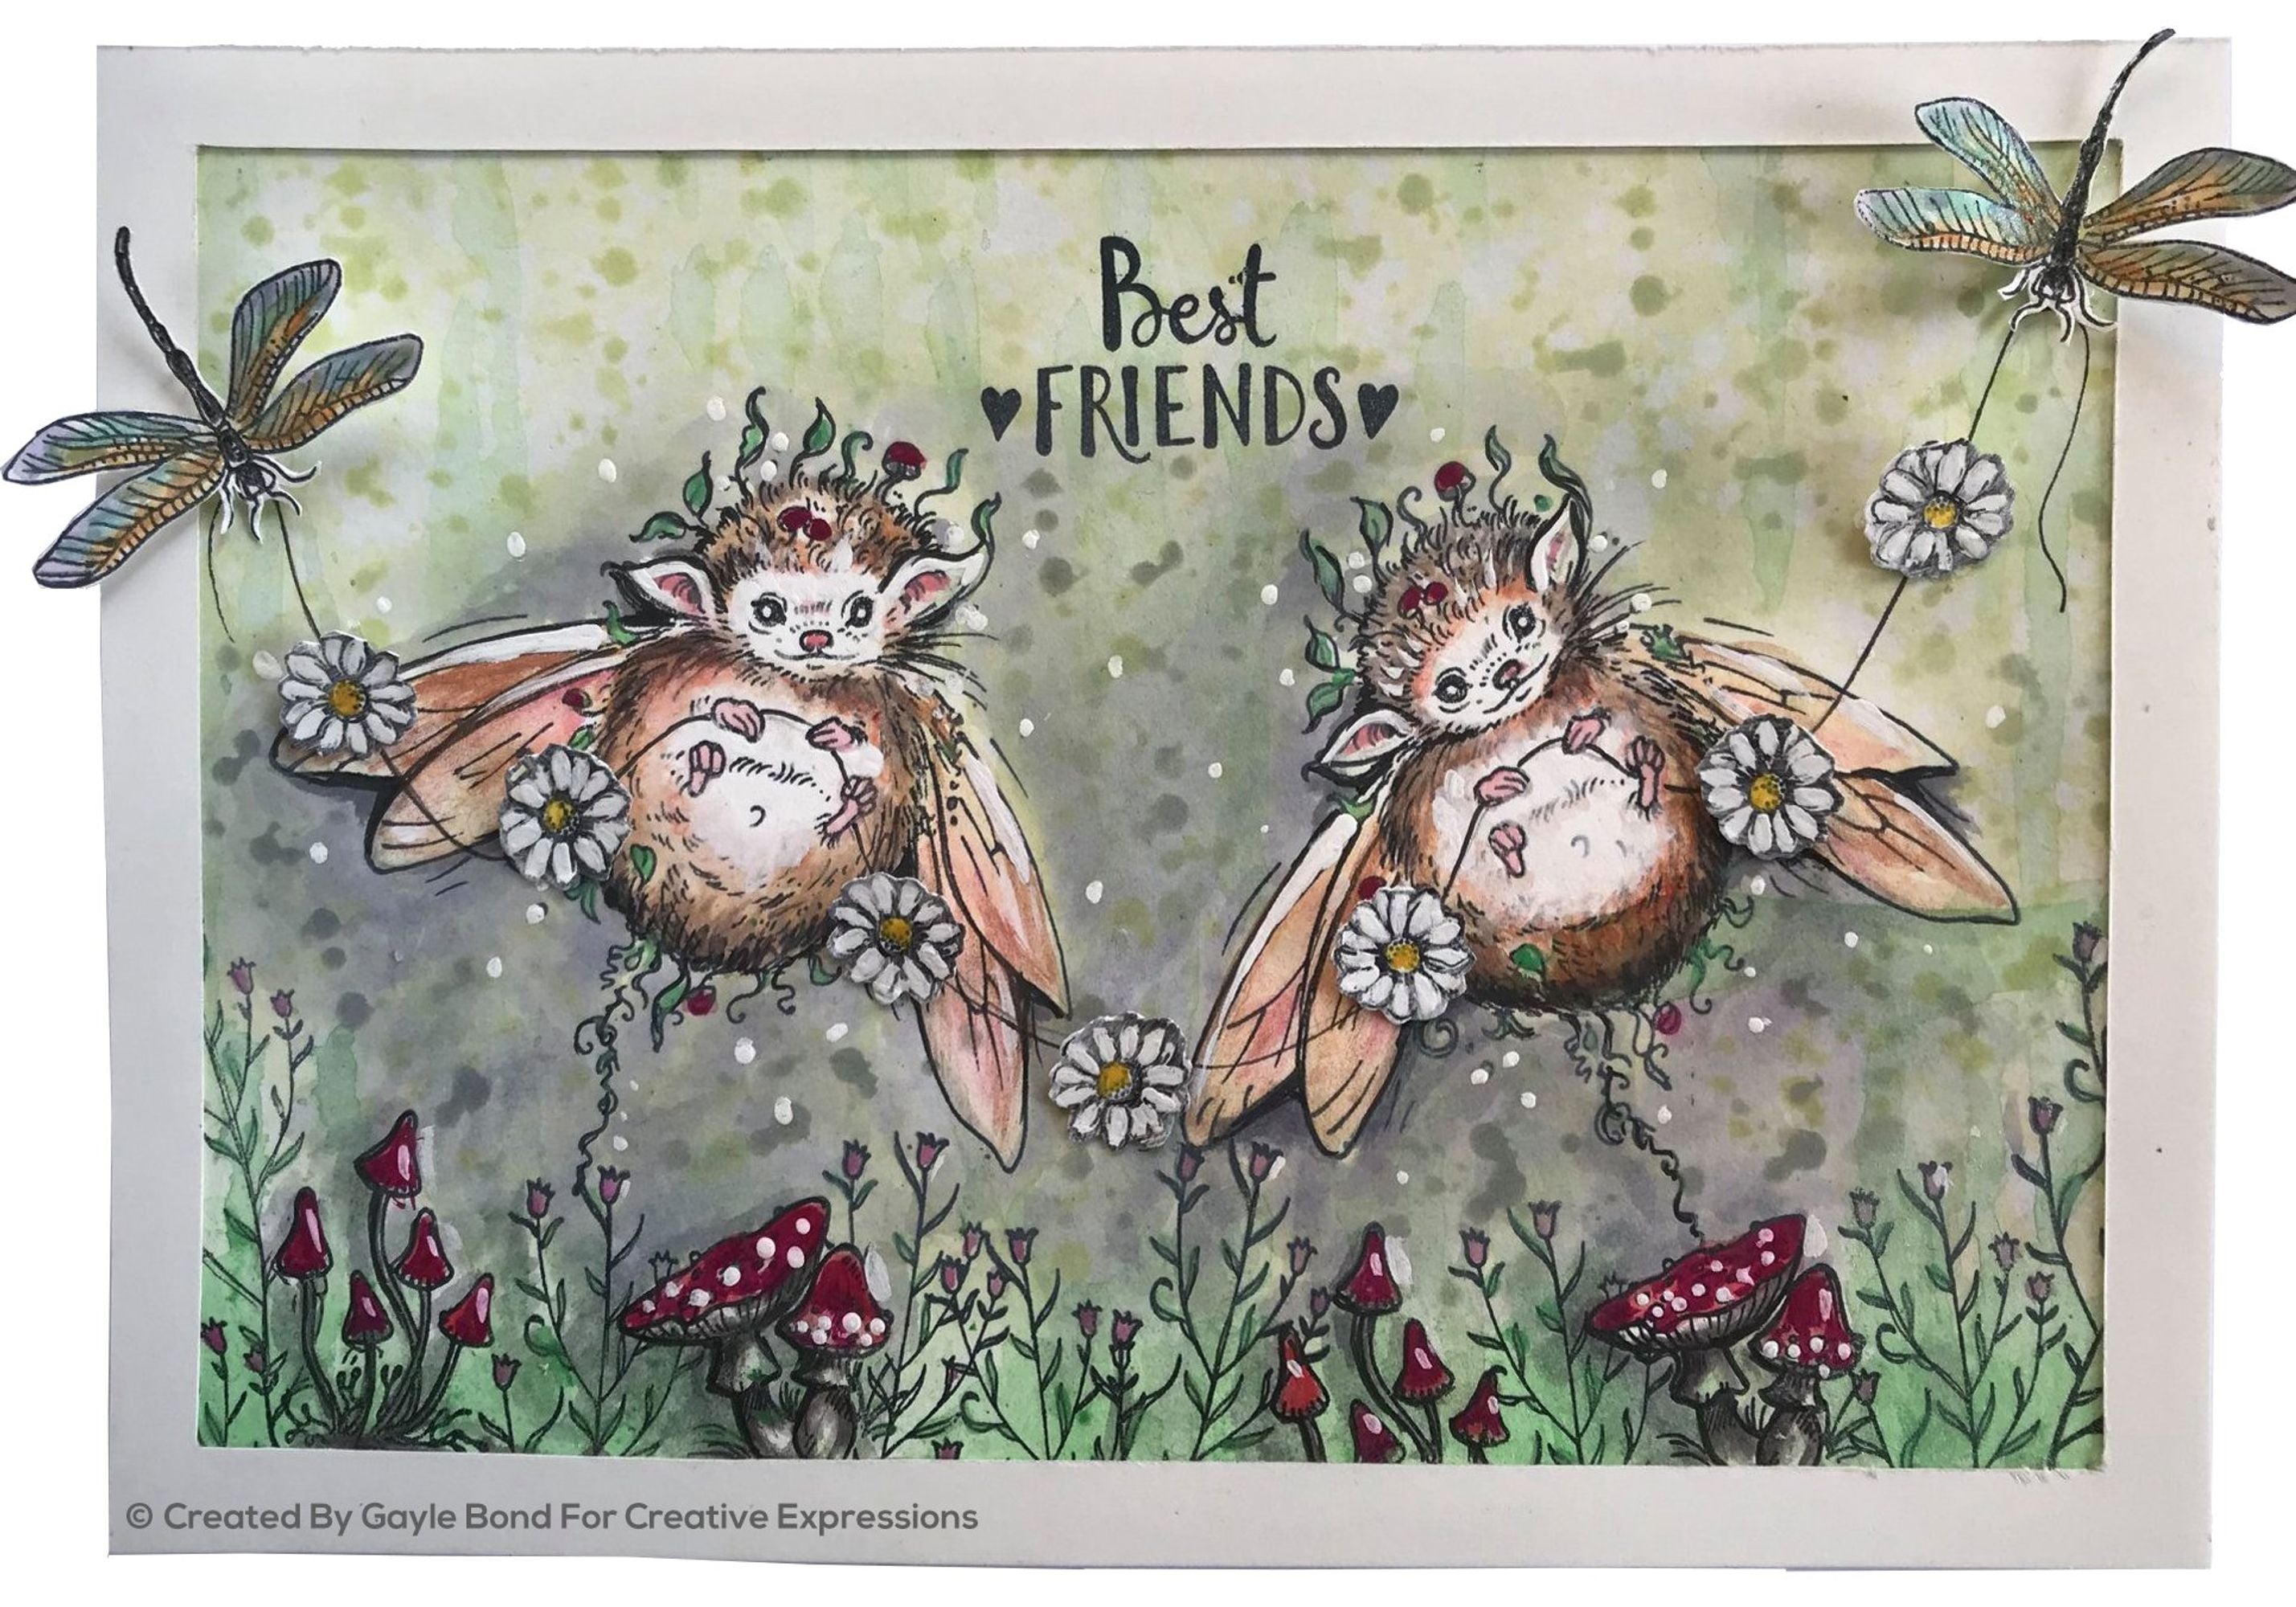 Thistlehogs A5 Clear Stamp Set